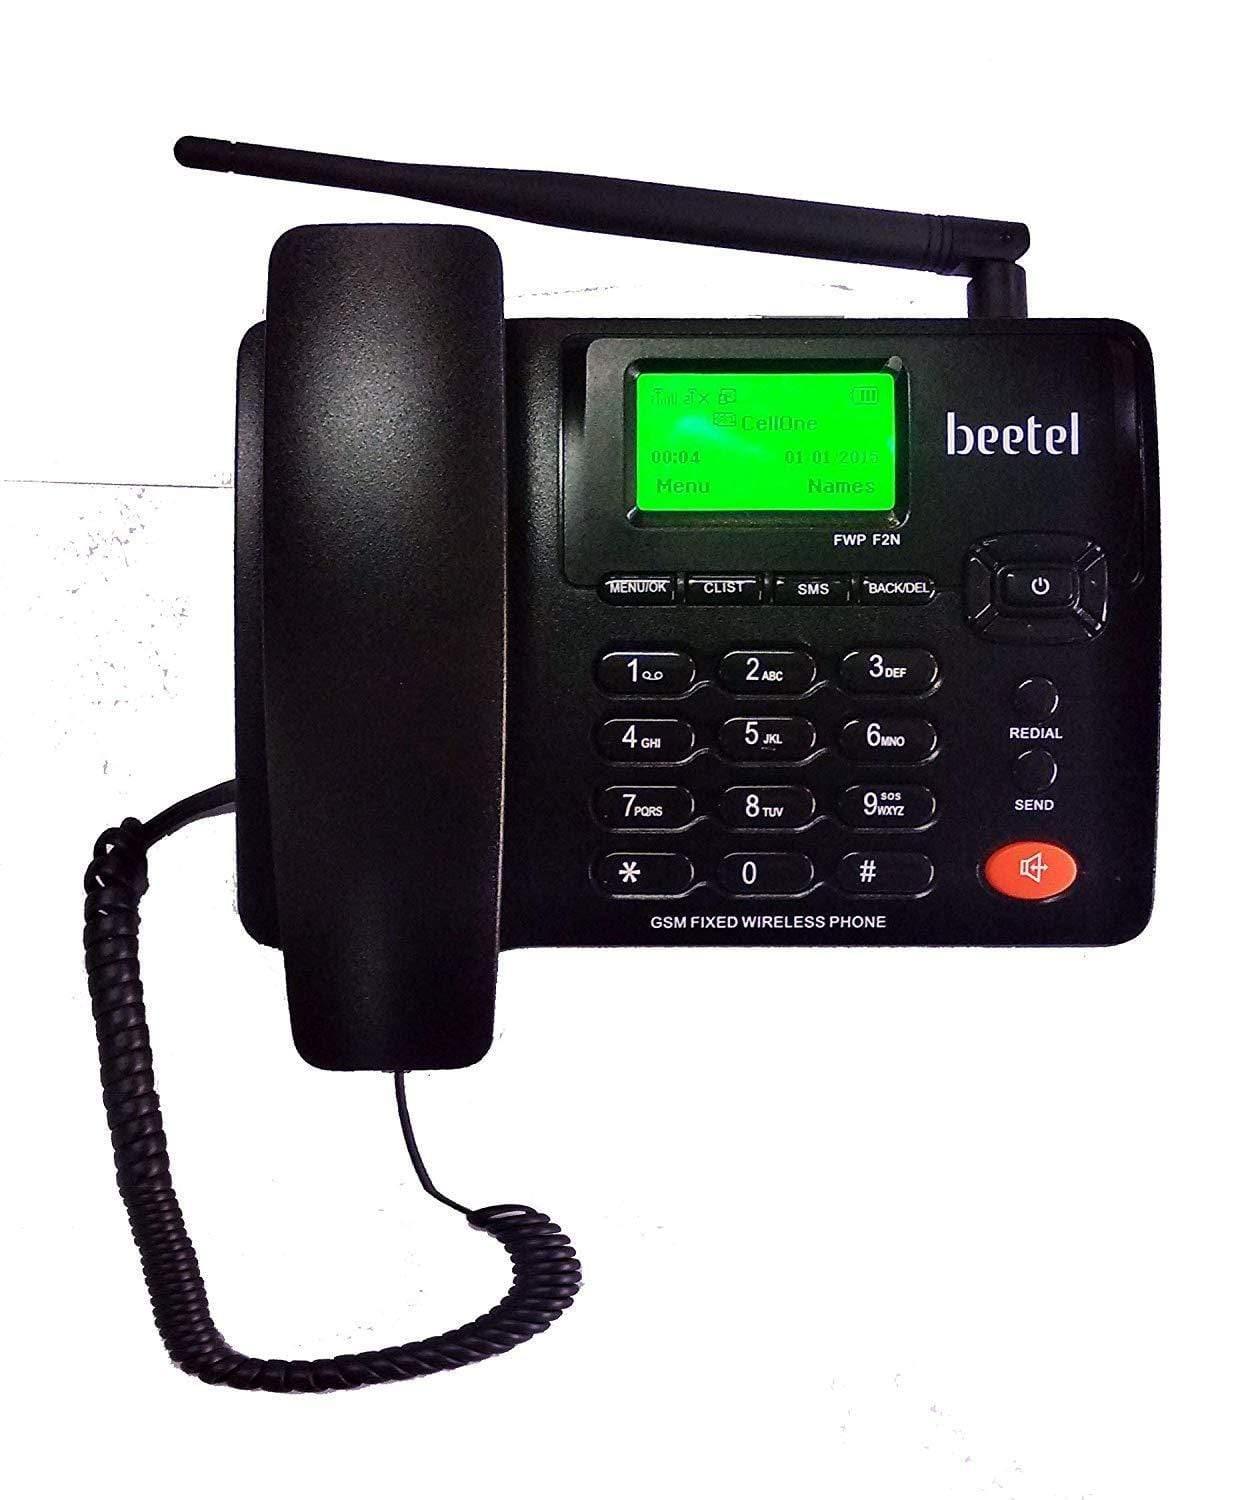 Beetel M71 Landline phone repairing and fault finding - YouTube